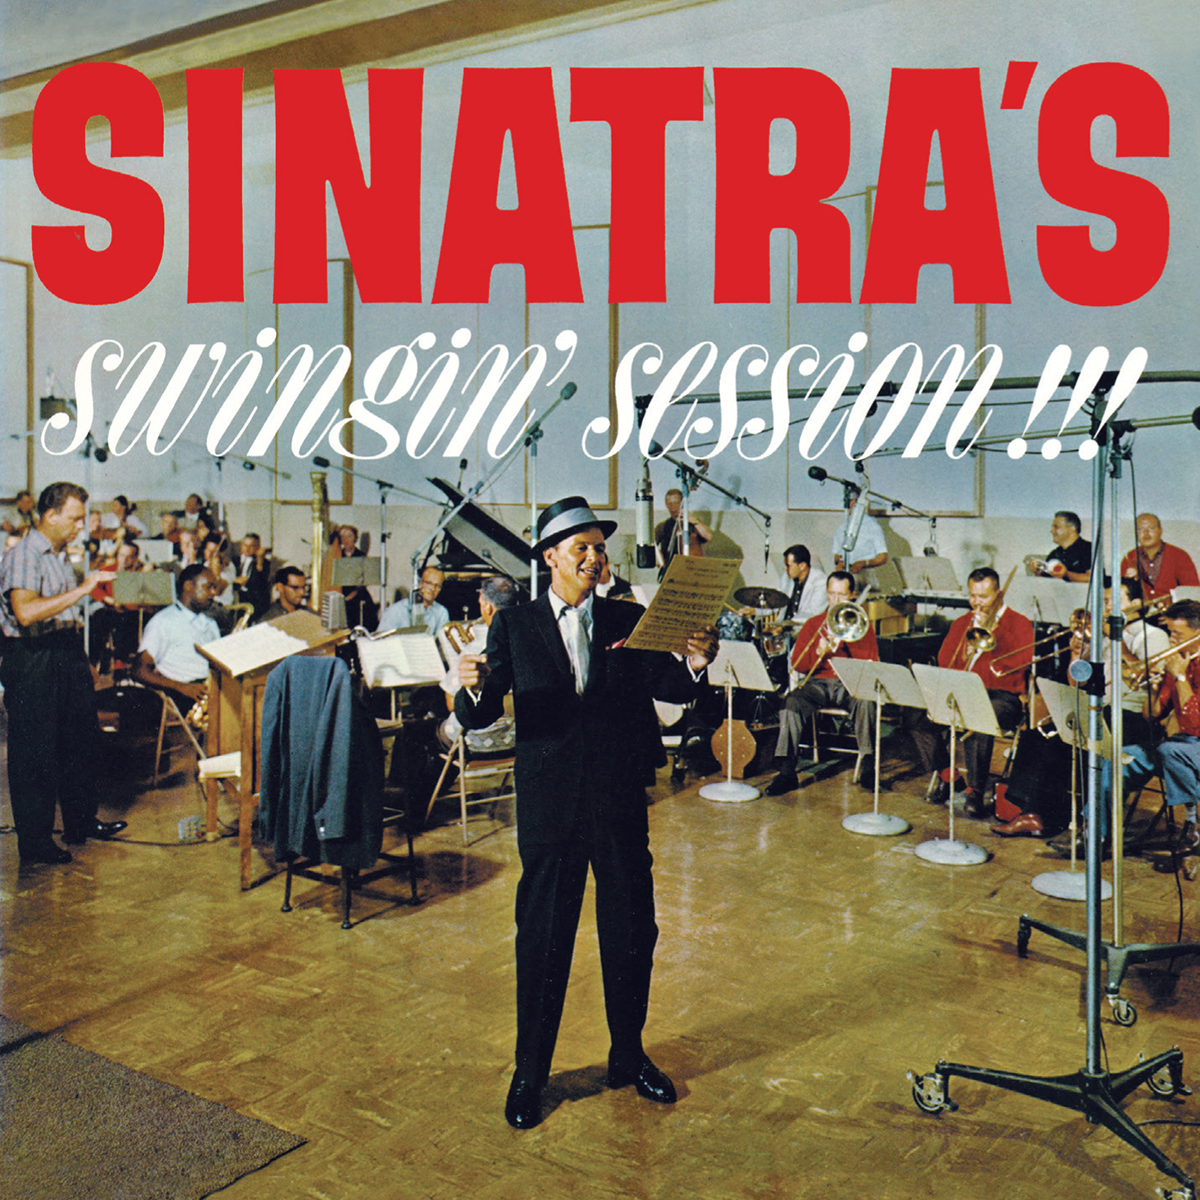 Sinatra's Swingin' Session + A Swingin' Affair!